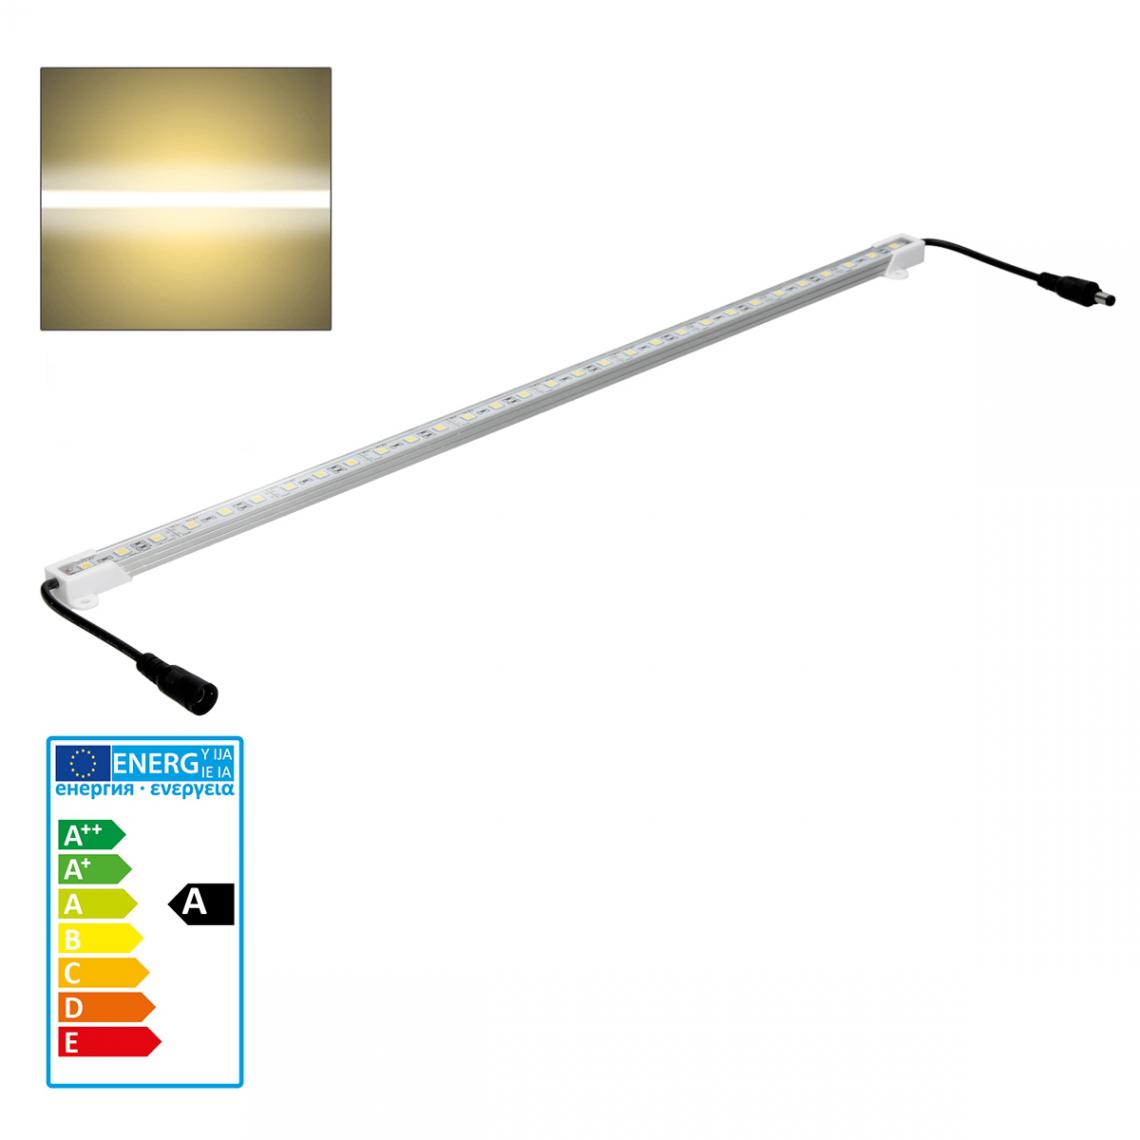 Ecd Germany - ECD Germany Bande de lumière Barre lumineuse blanc chaud 500mm LED IP65 éclairage sous-meuble - Ruban LED